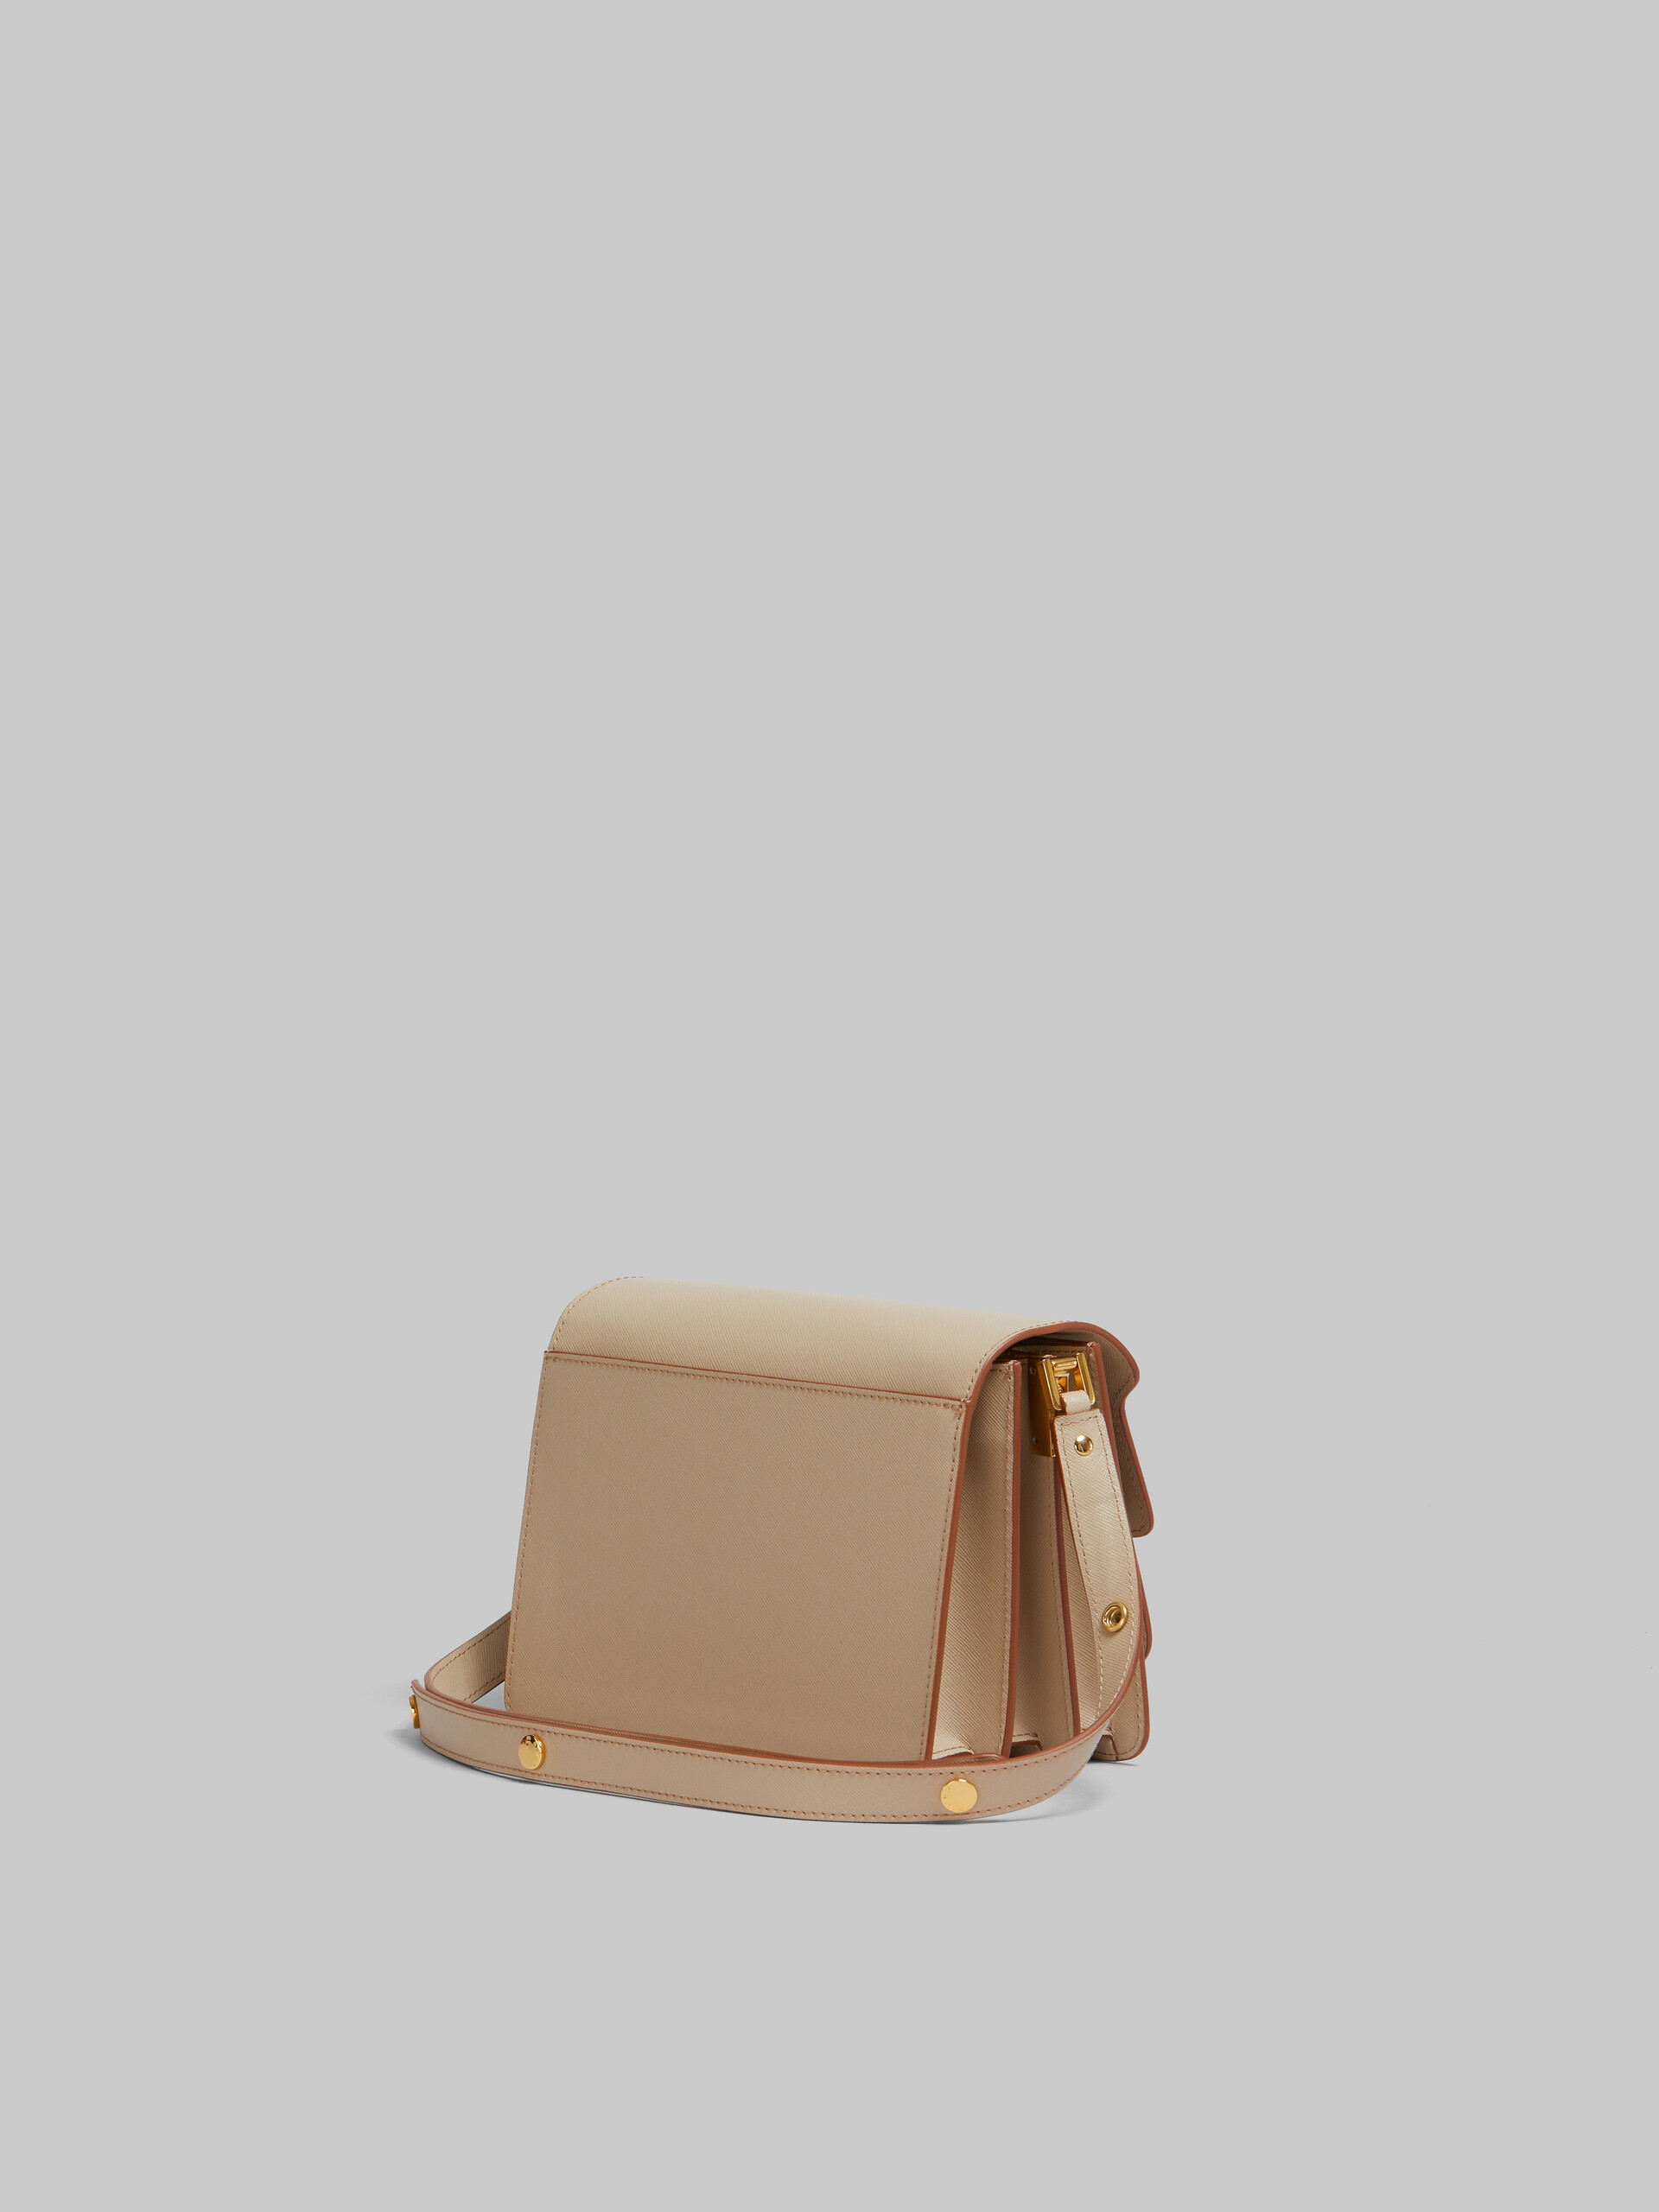 Beige saffiano leather medium Trunk bag - Shoulder Bags - Image 3